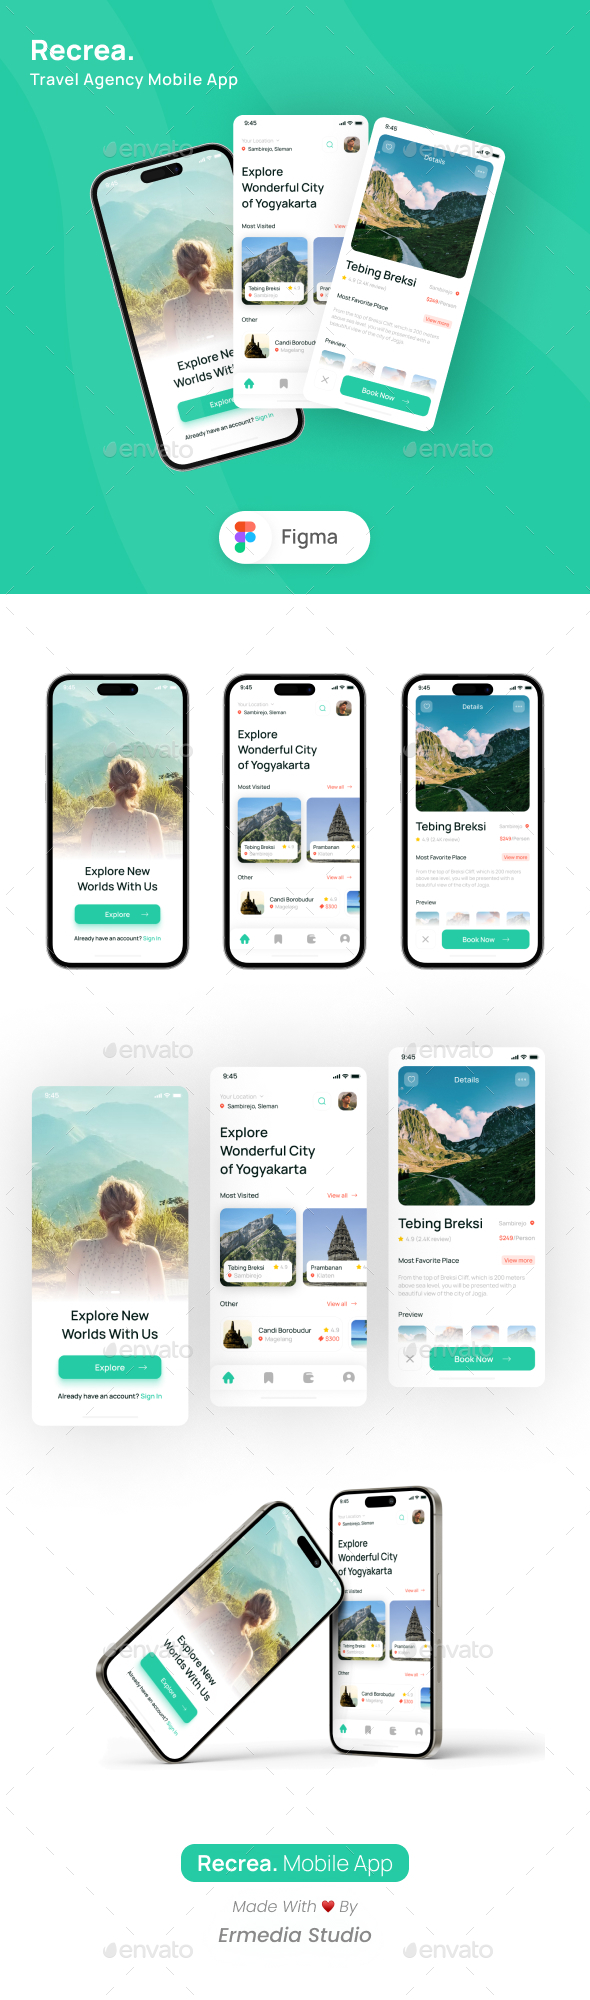 [DOWNLOAD]Recrea - Travel Agency Mobile App UI Kit